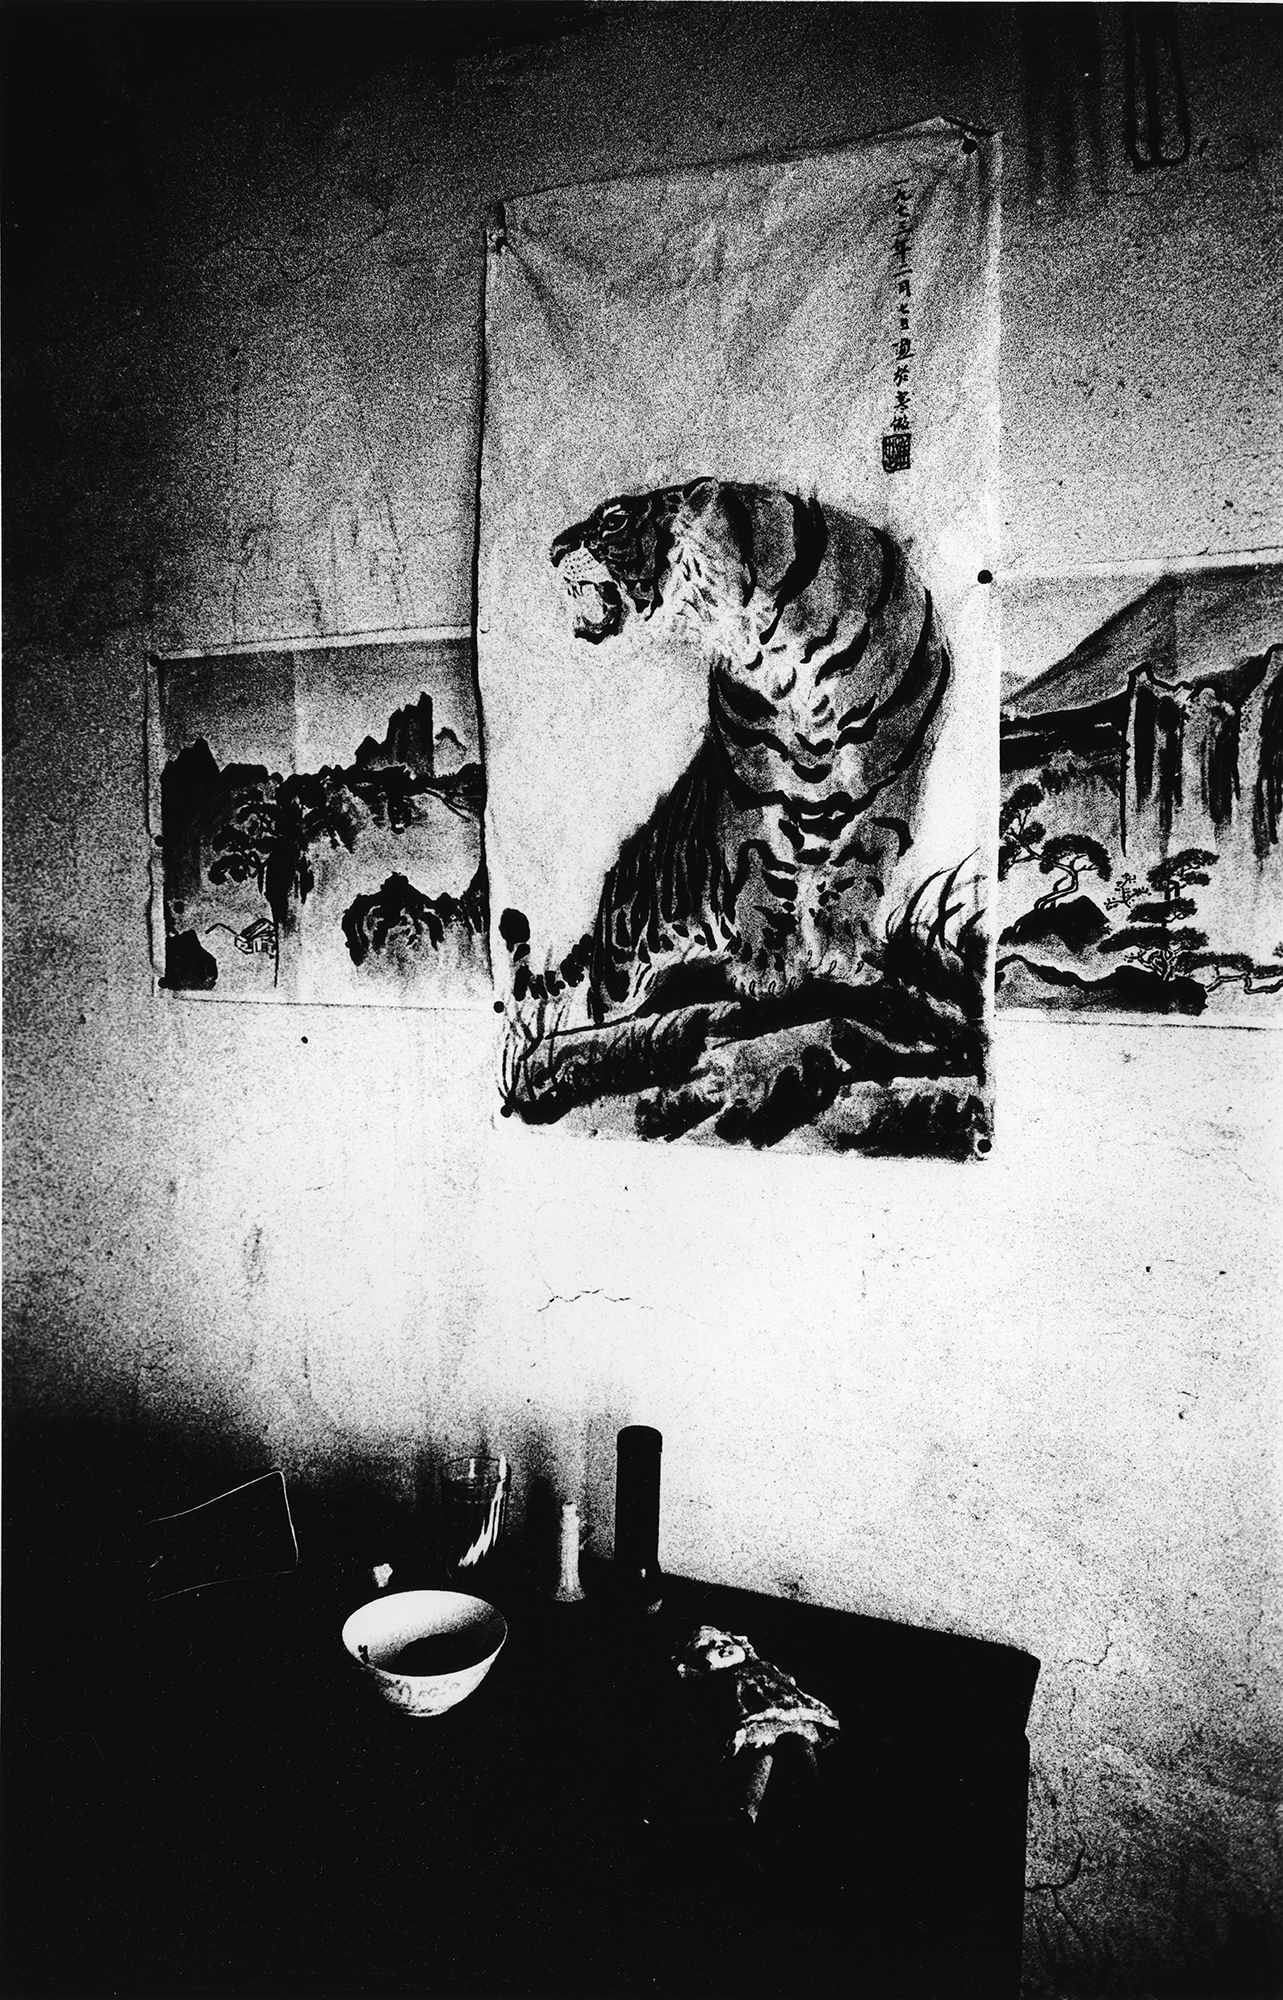 kazuo kitai china 1970s photography of china 83上海馬橋人民公社1973 - Kazuo Kitai |  - Kazuo Kitai